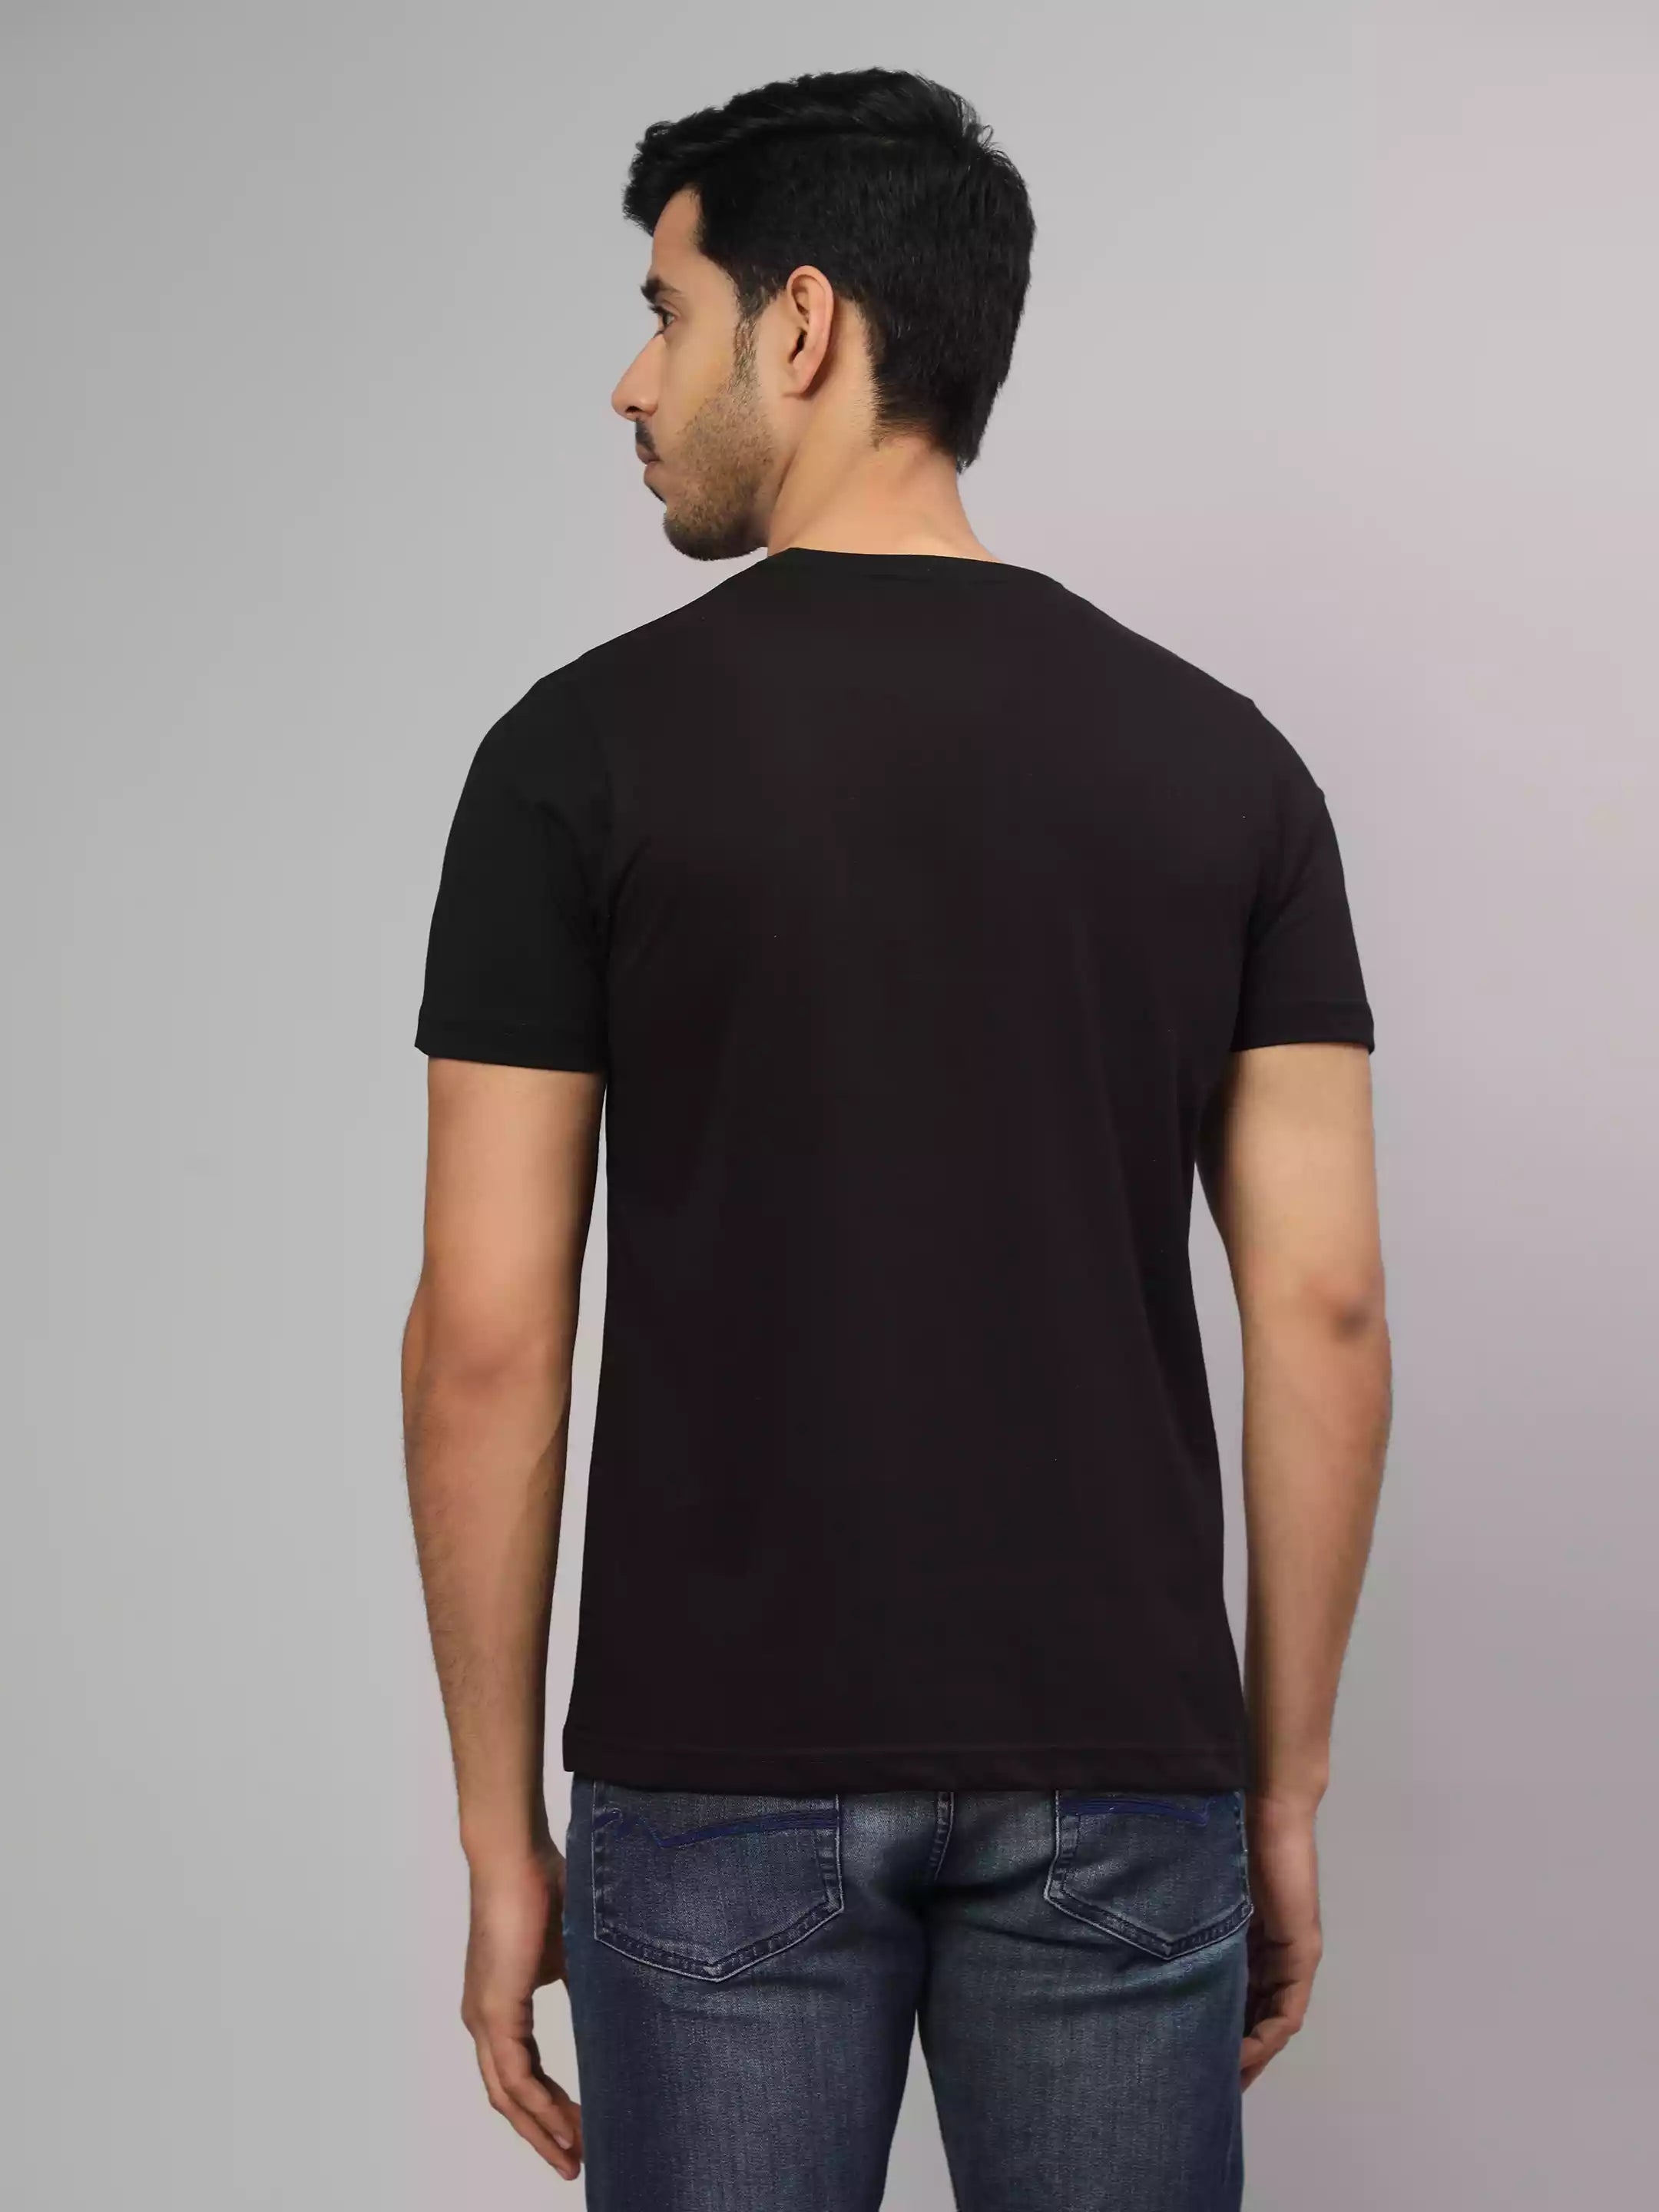 Shaadi - Sukhiaatma Unisex Graphic Printed Black T-shirt